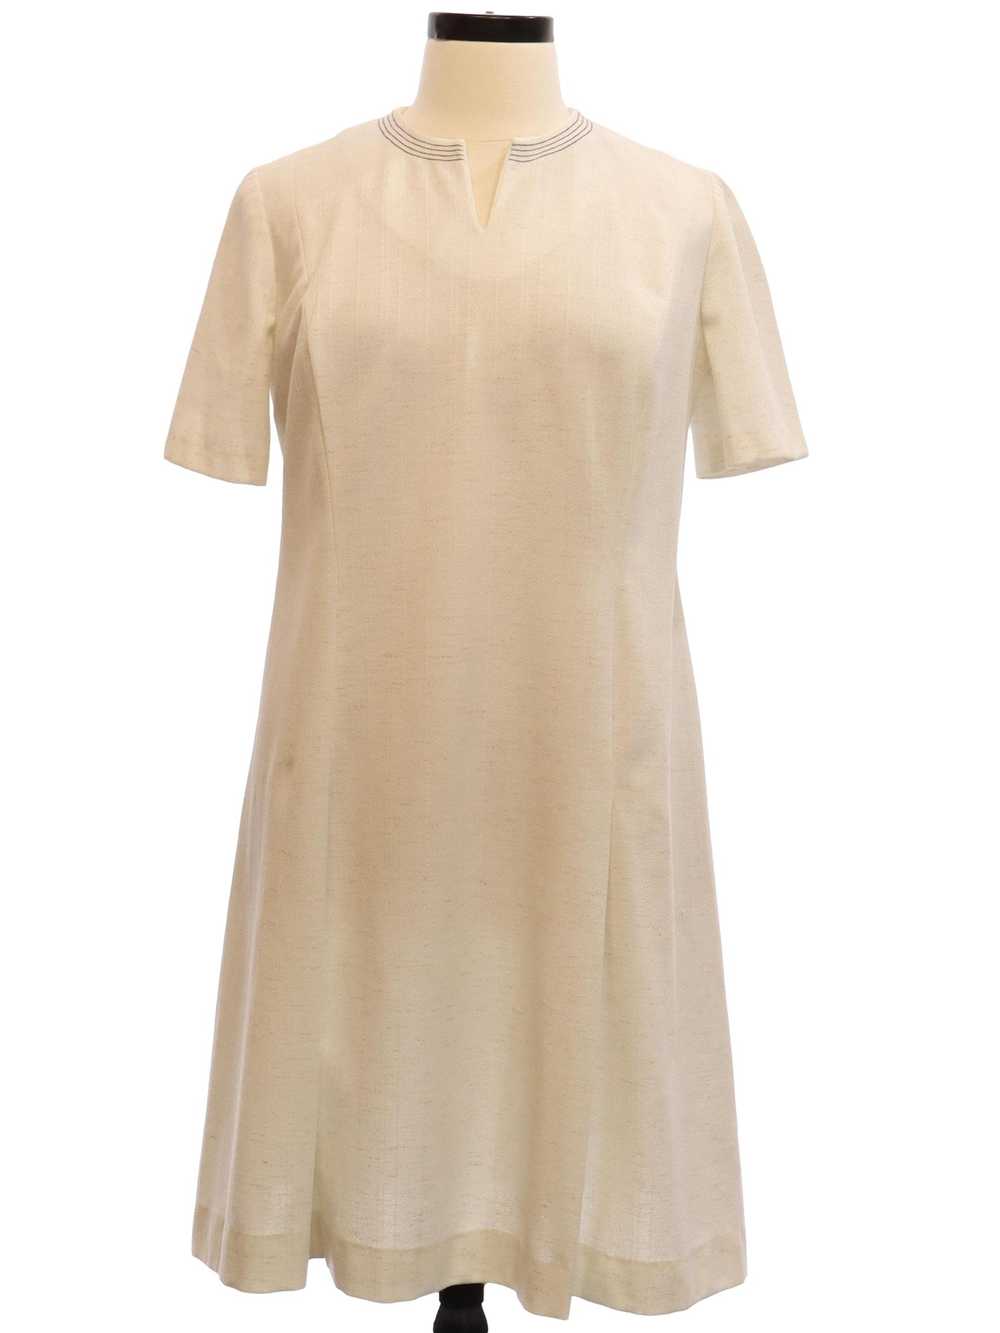 1960's Tribute Mod Knit Dress - image 1